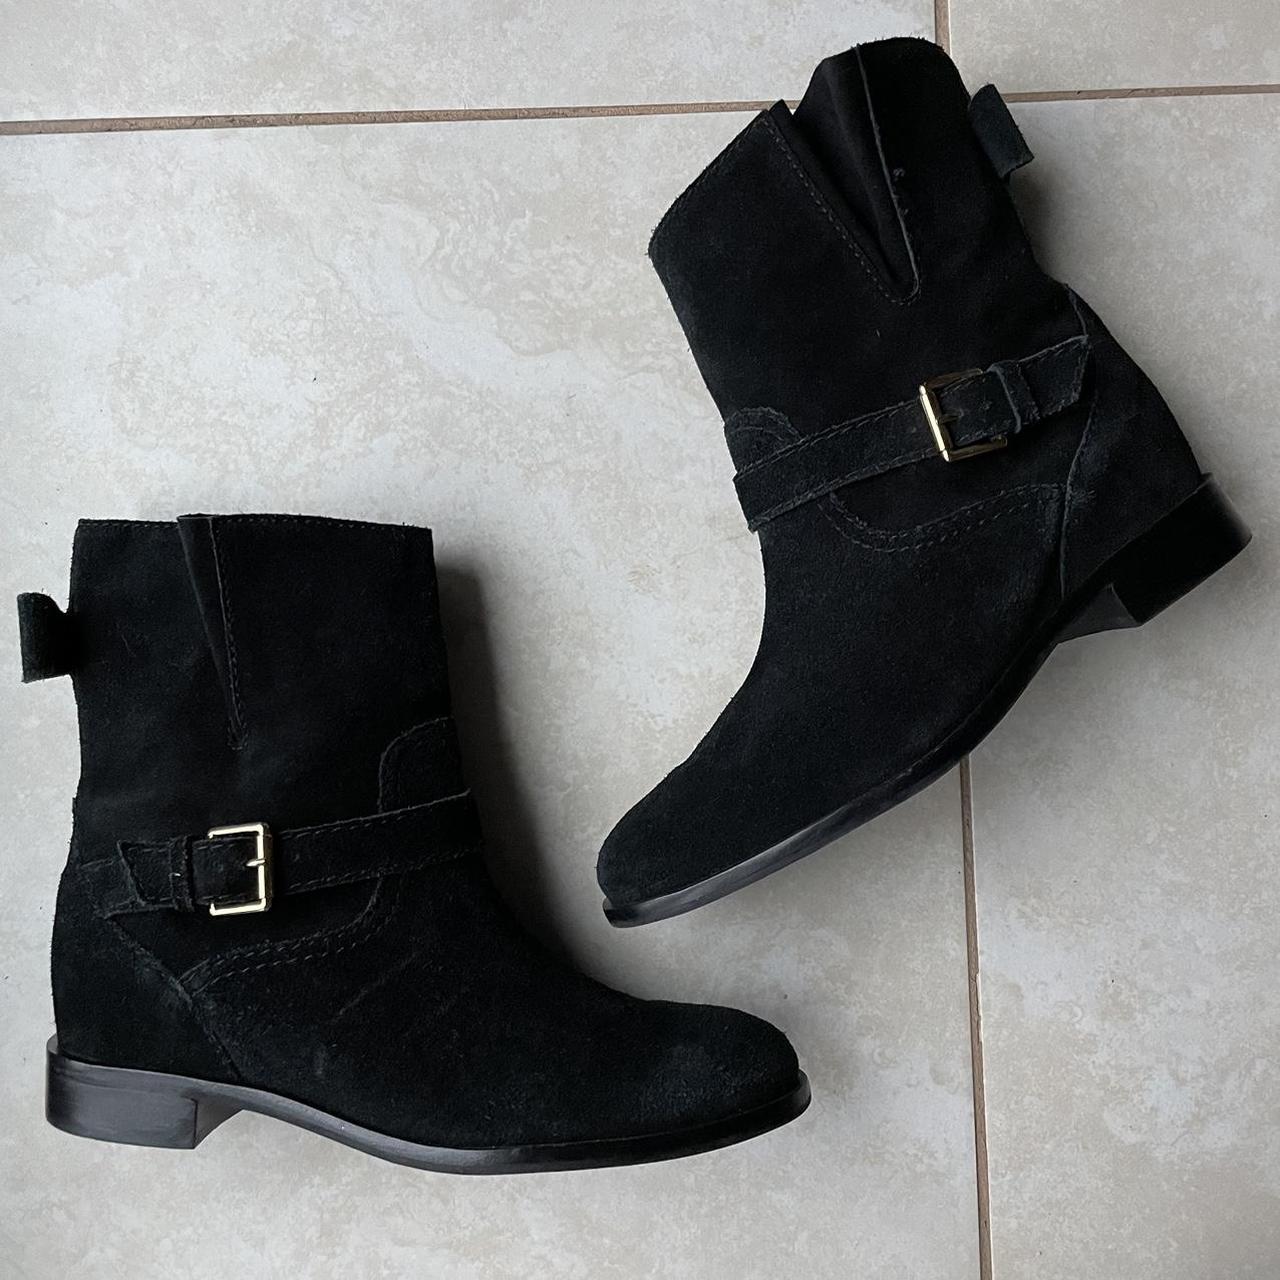 Kate Spade New York Women's Black Boots | Depop